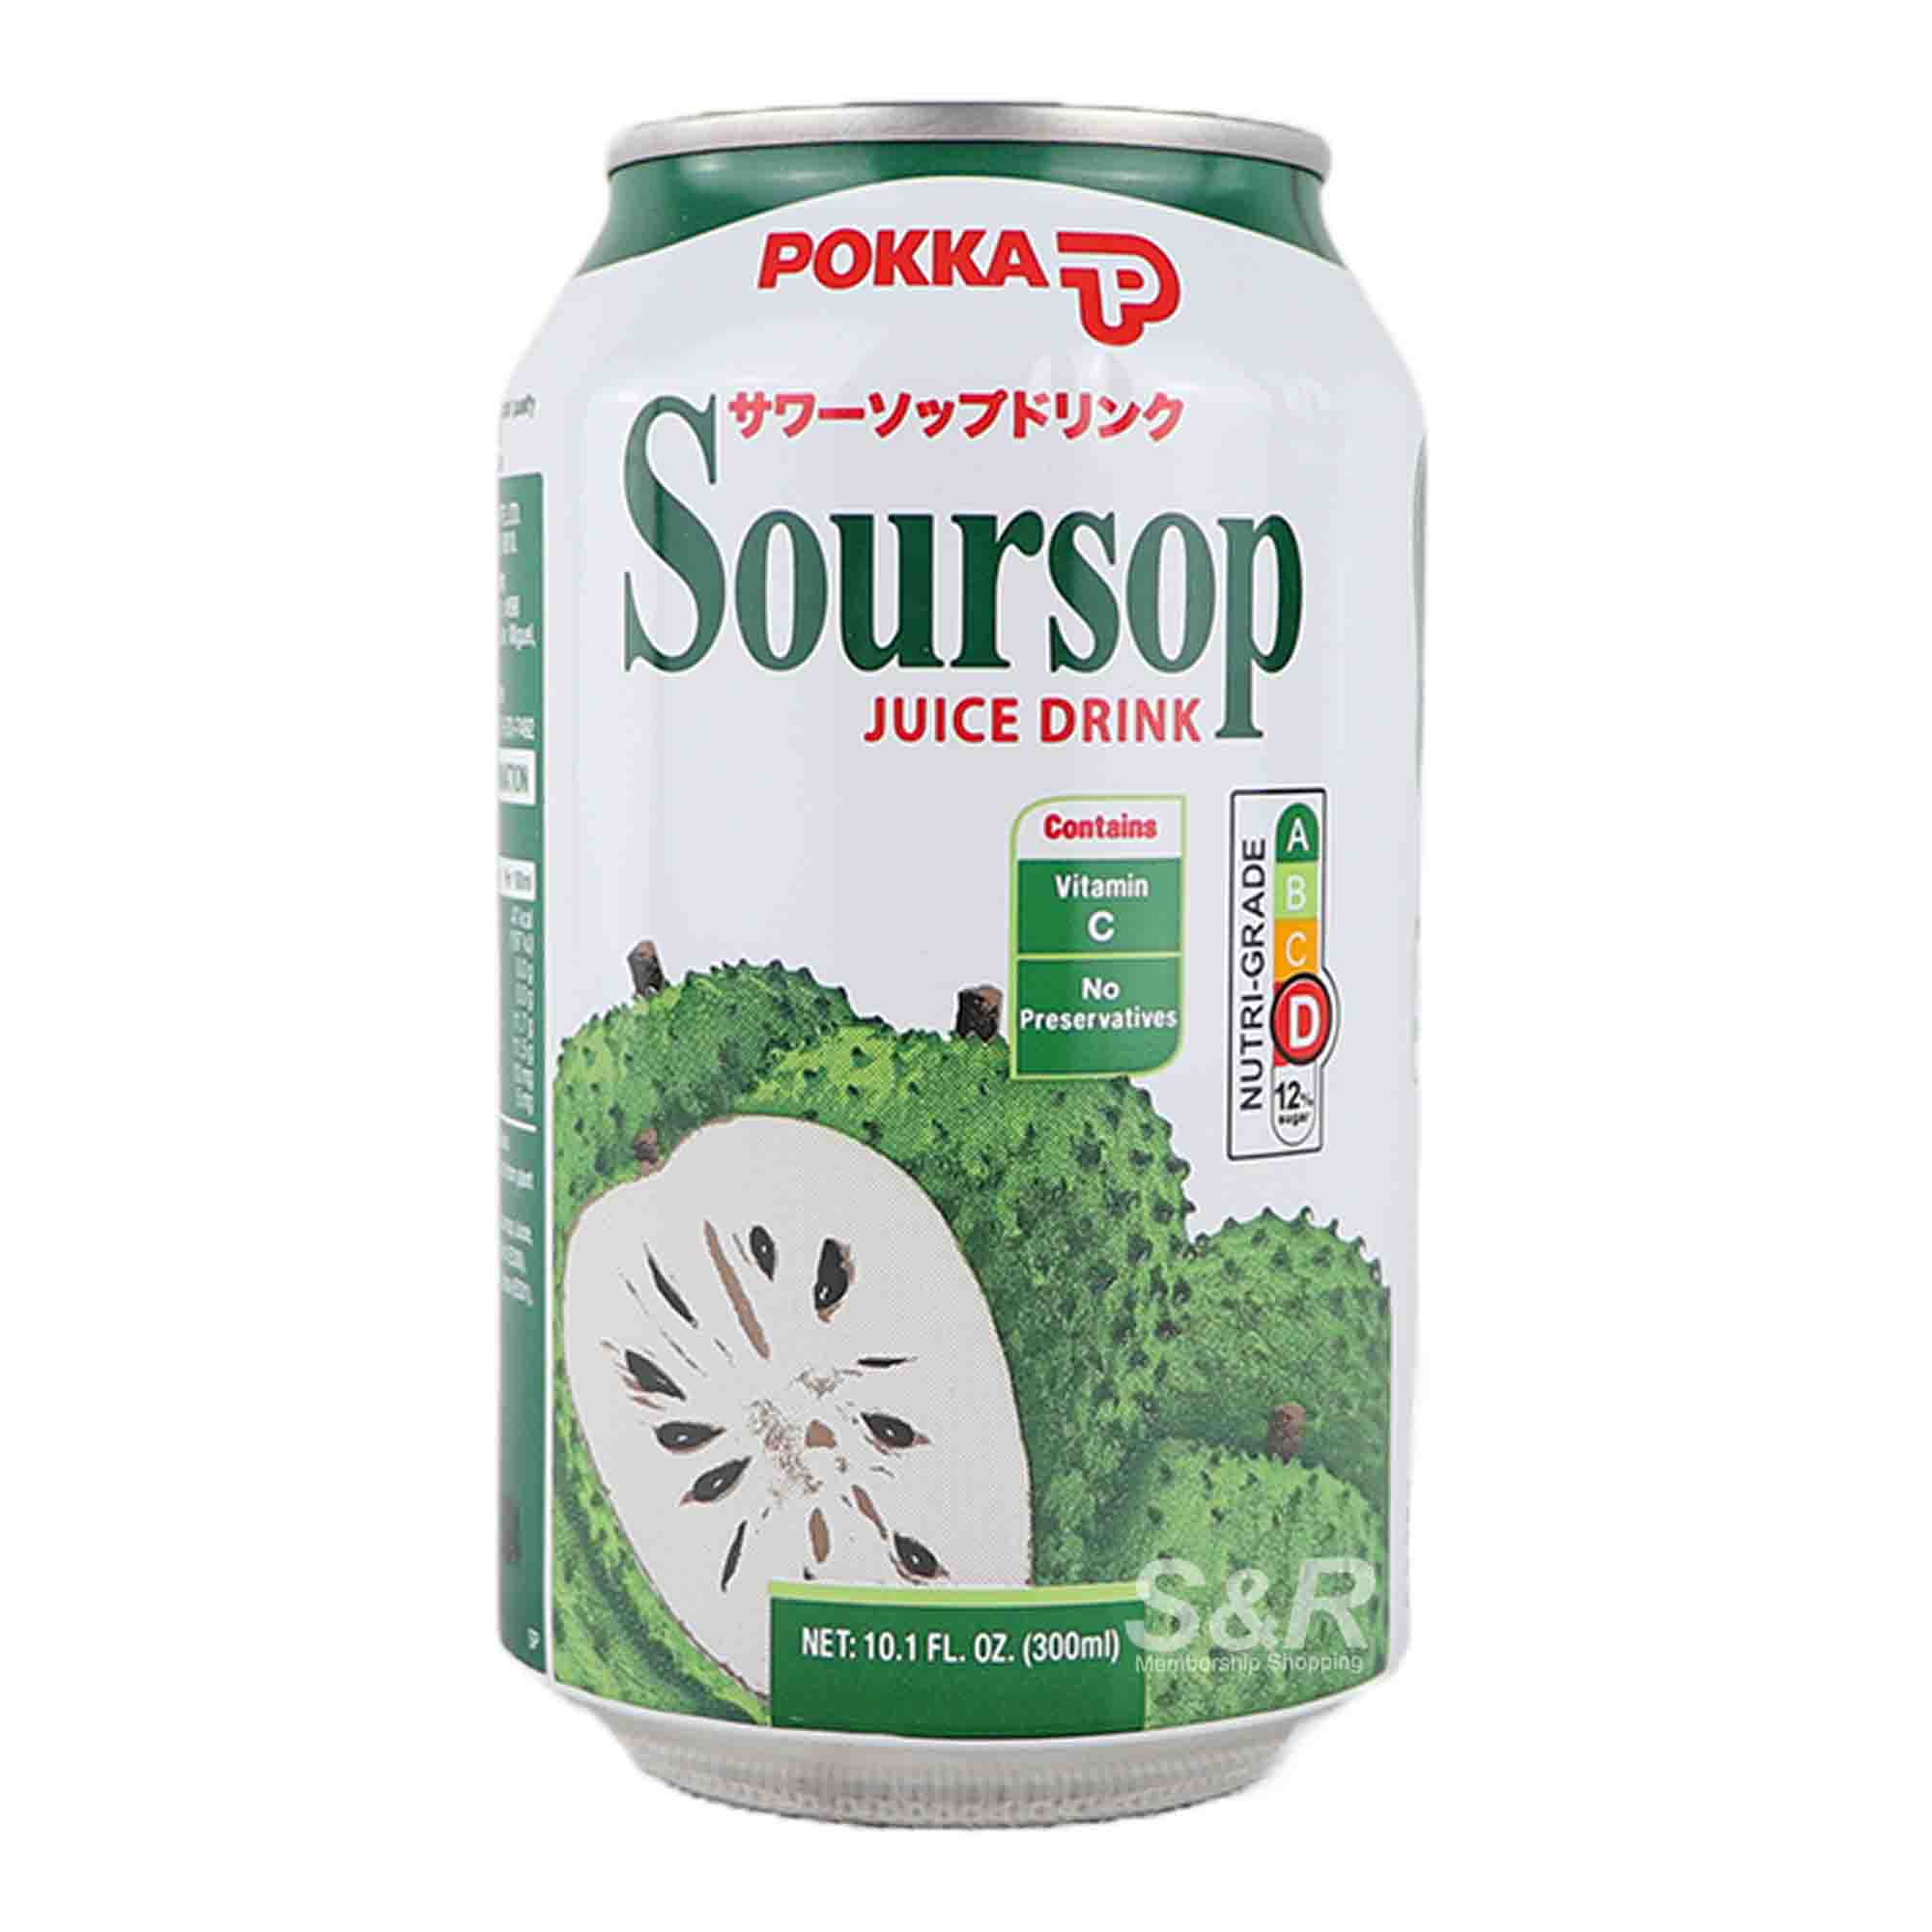 Pokka Soursop Juice Drink 300mL